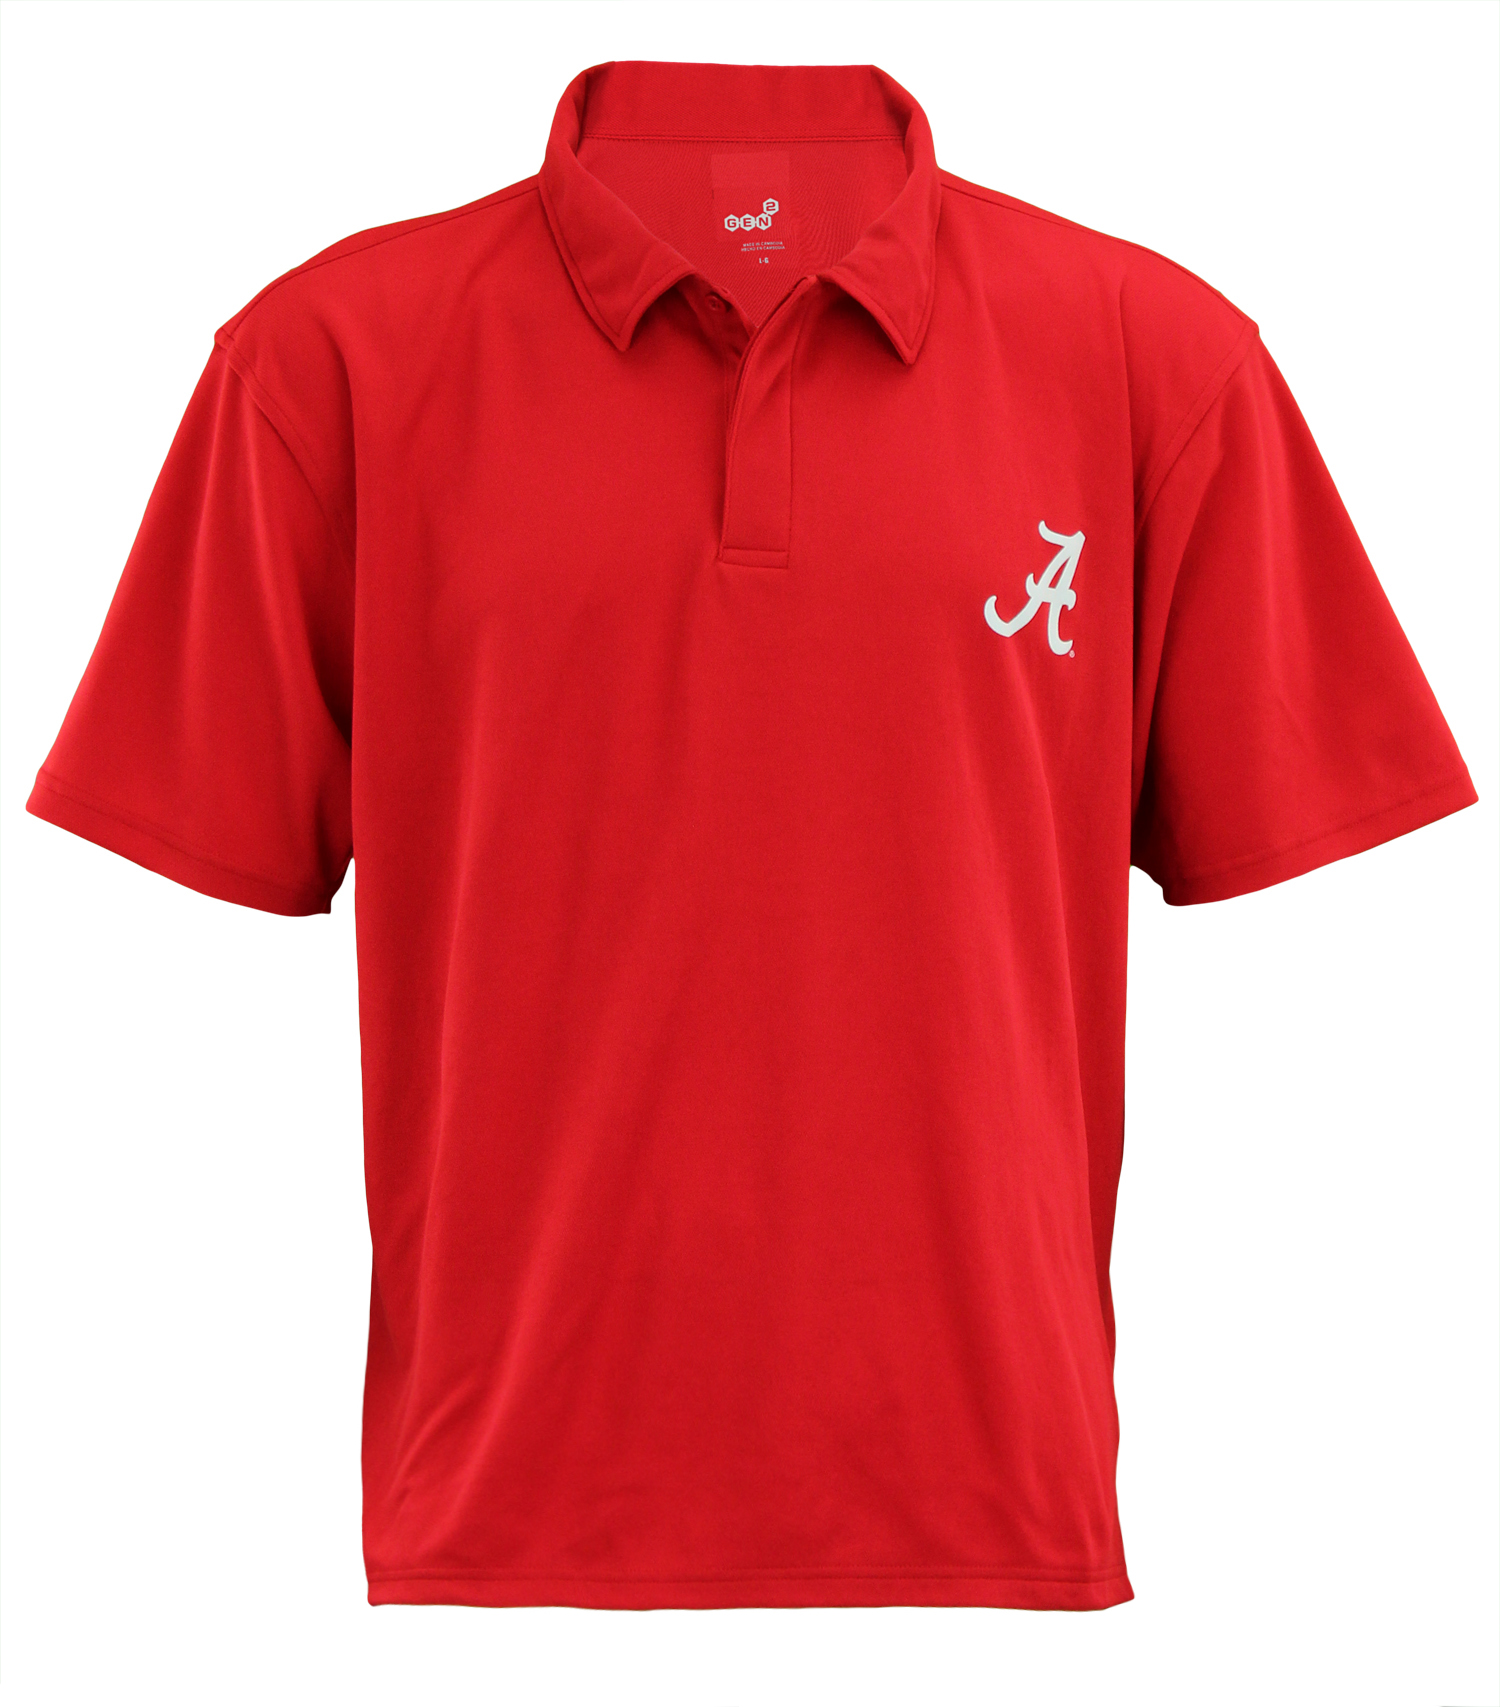 NCAA Men's Alabama Crimson Tide Short Sleeve Performance Polo Shirt | eBay